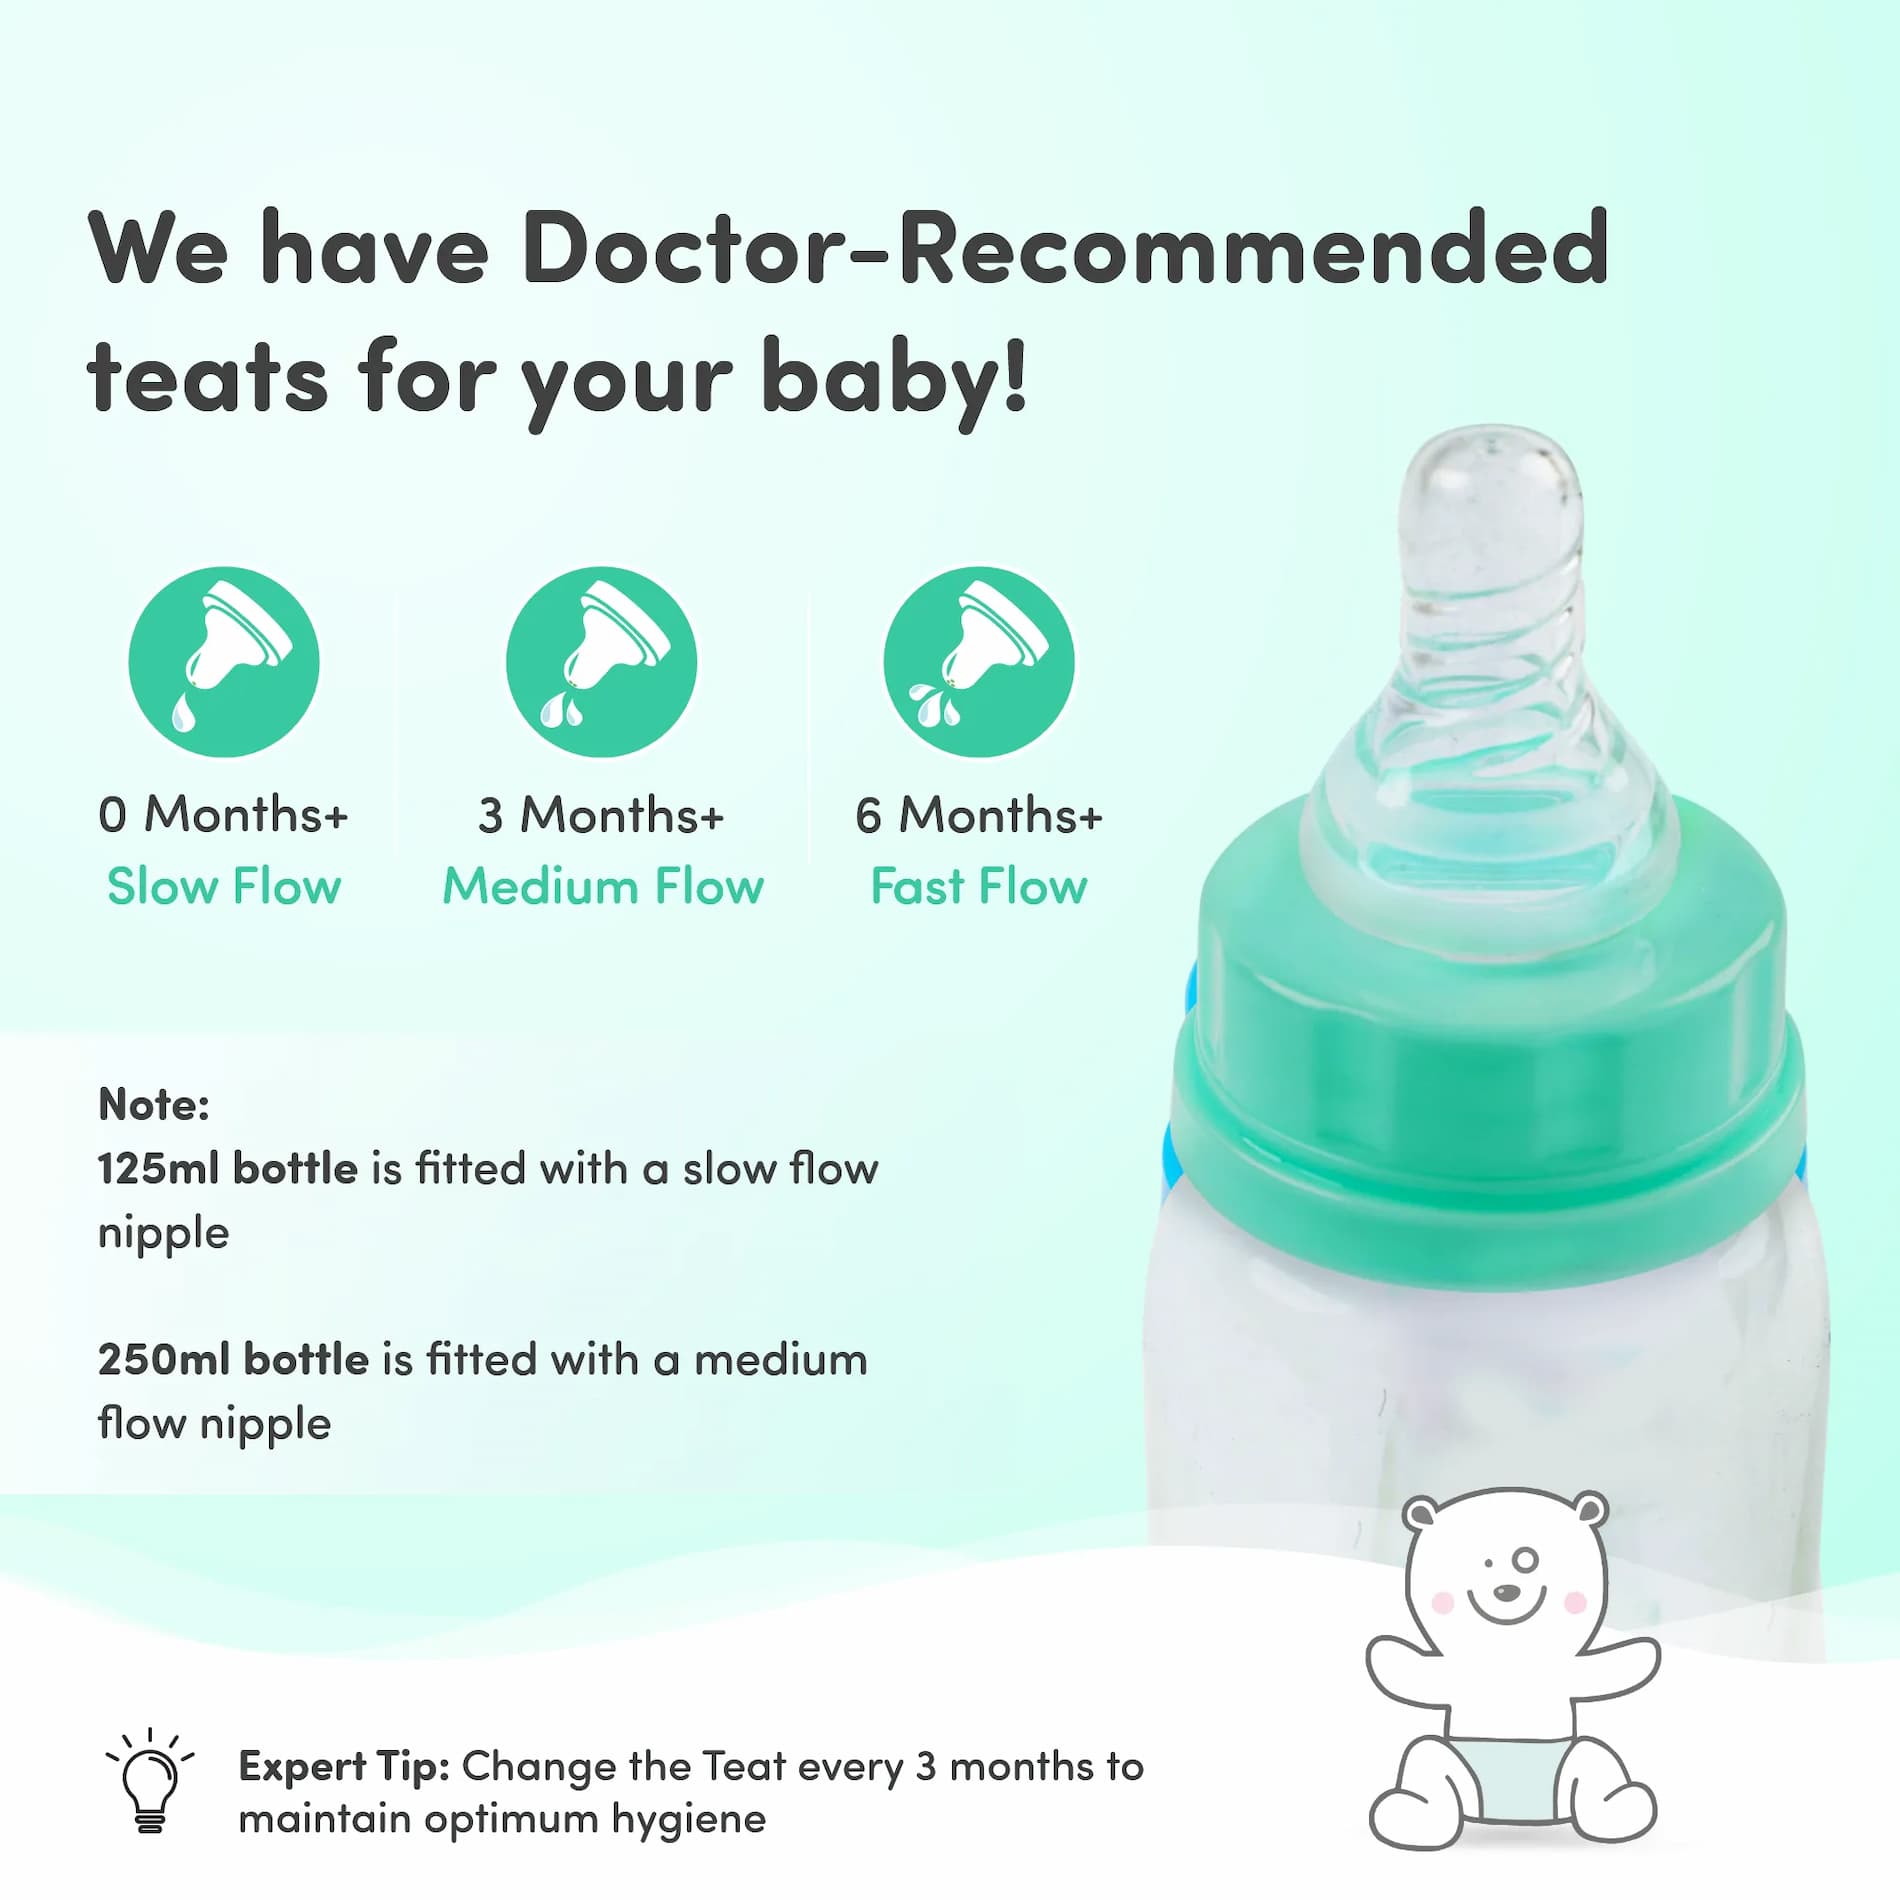 2-in-1 Baby Feeding Bottle | BPA Free with Anti-Colic Nipple & Spoon | Easy Flow Neck Design - Green & Giraffe 125ml & 250ml